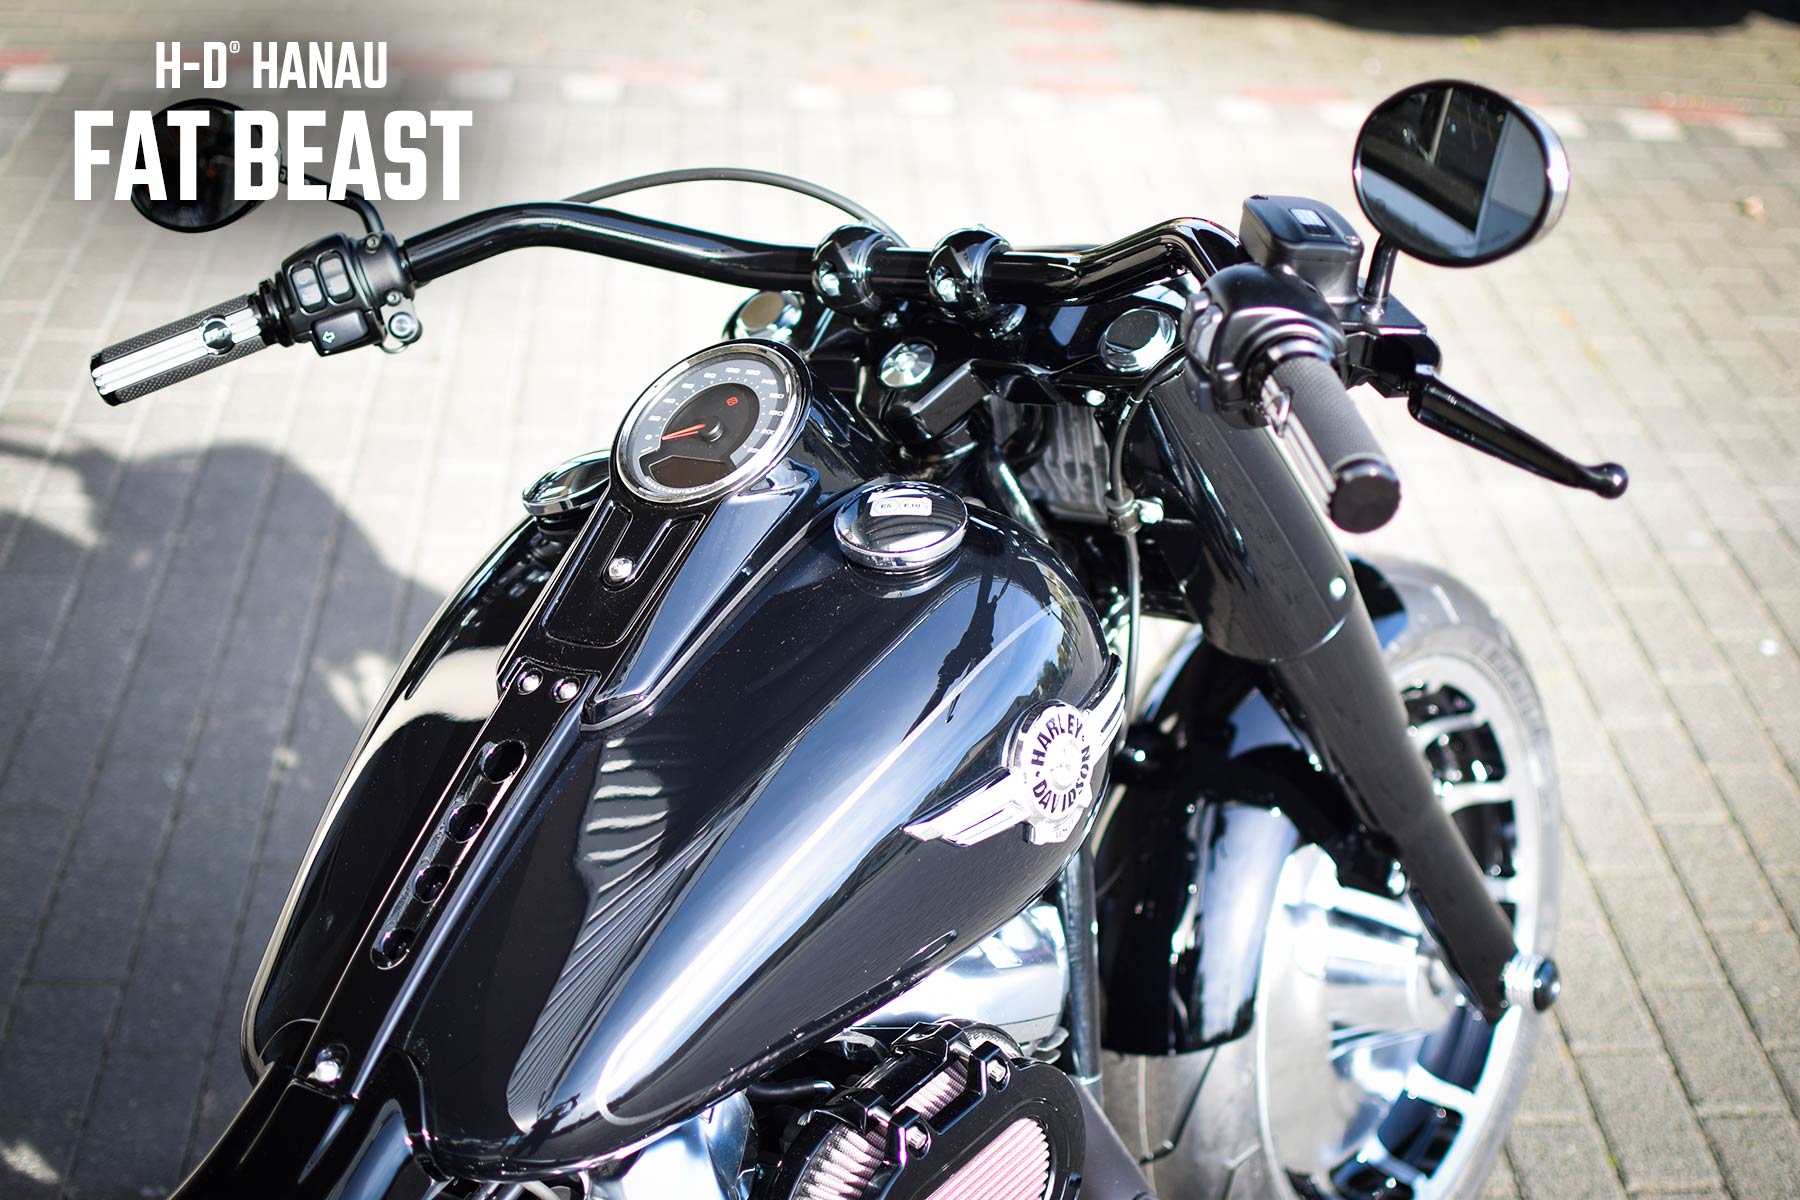 Harley-Davidson Hanau präsentiert Fat Beast Custombike - Umbau auf Fat Boy Basis